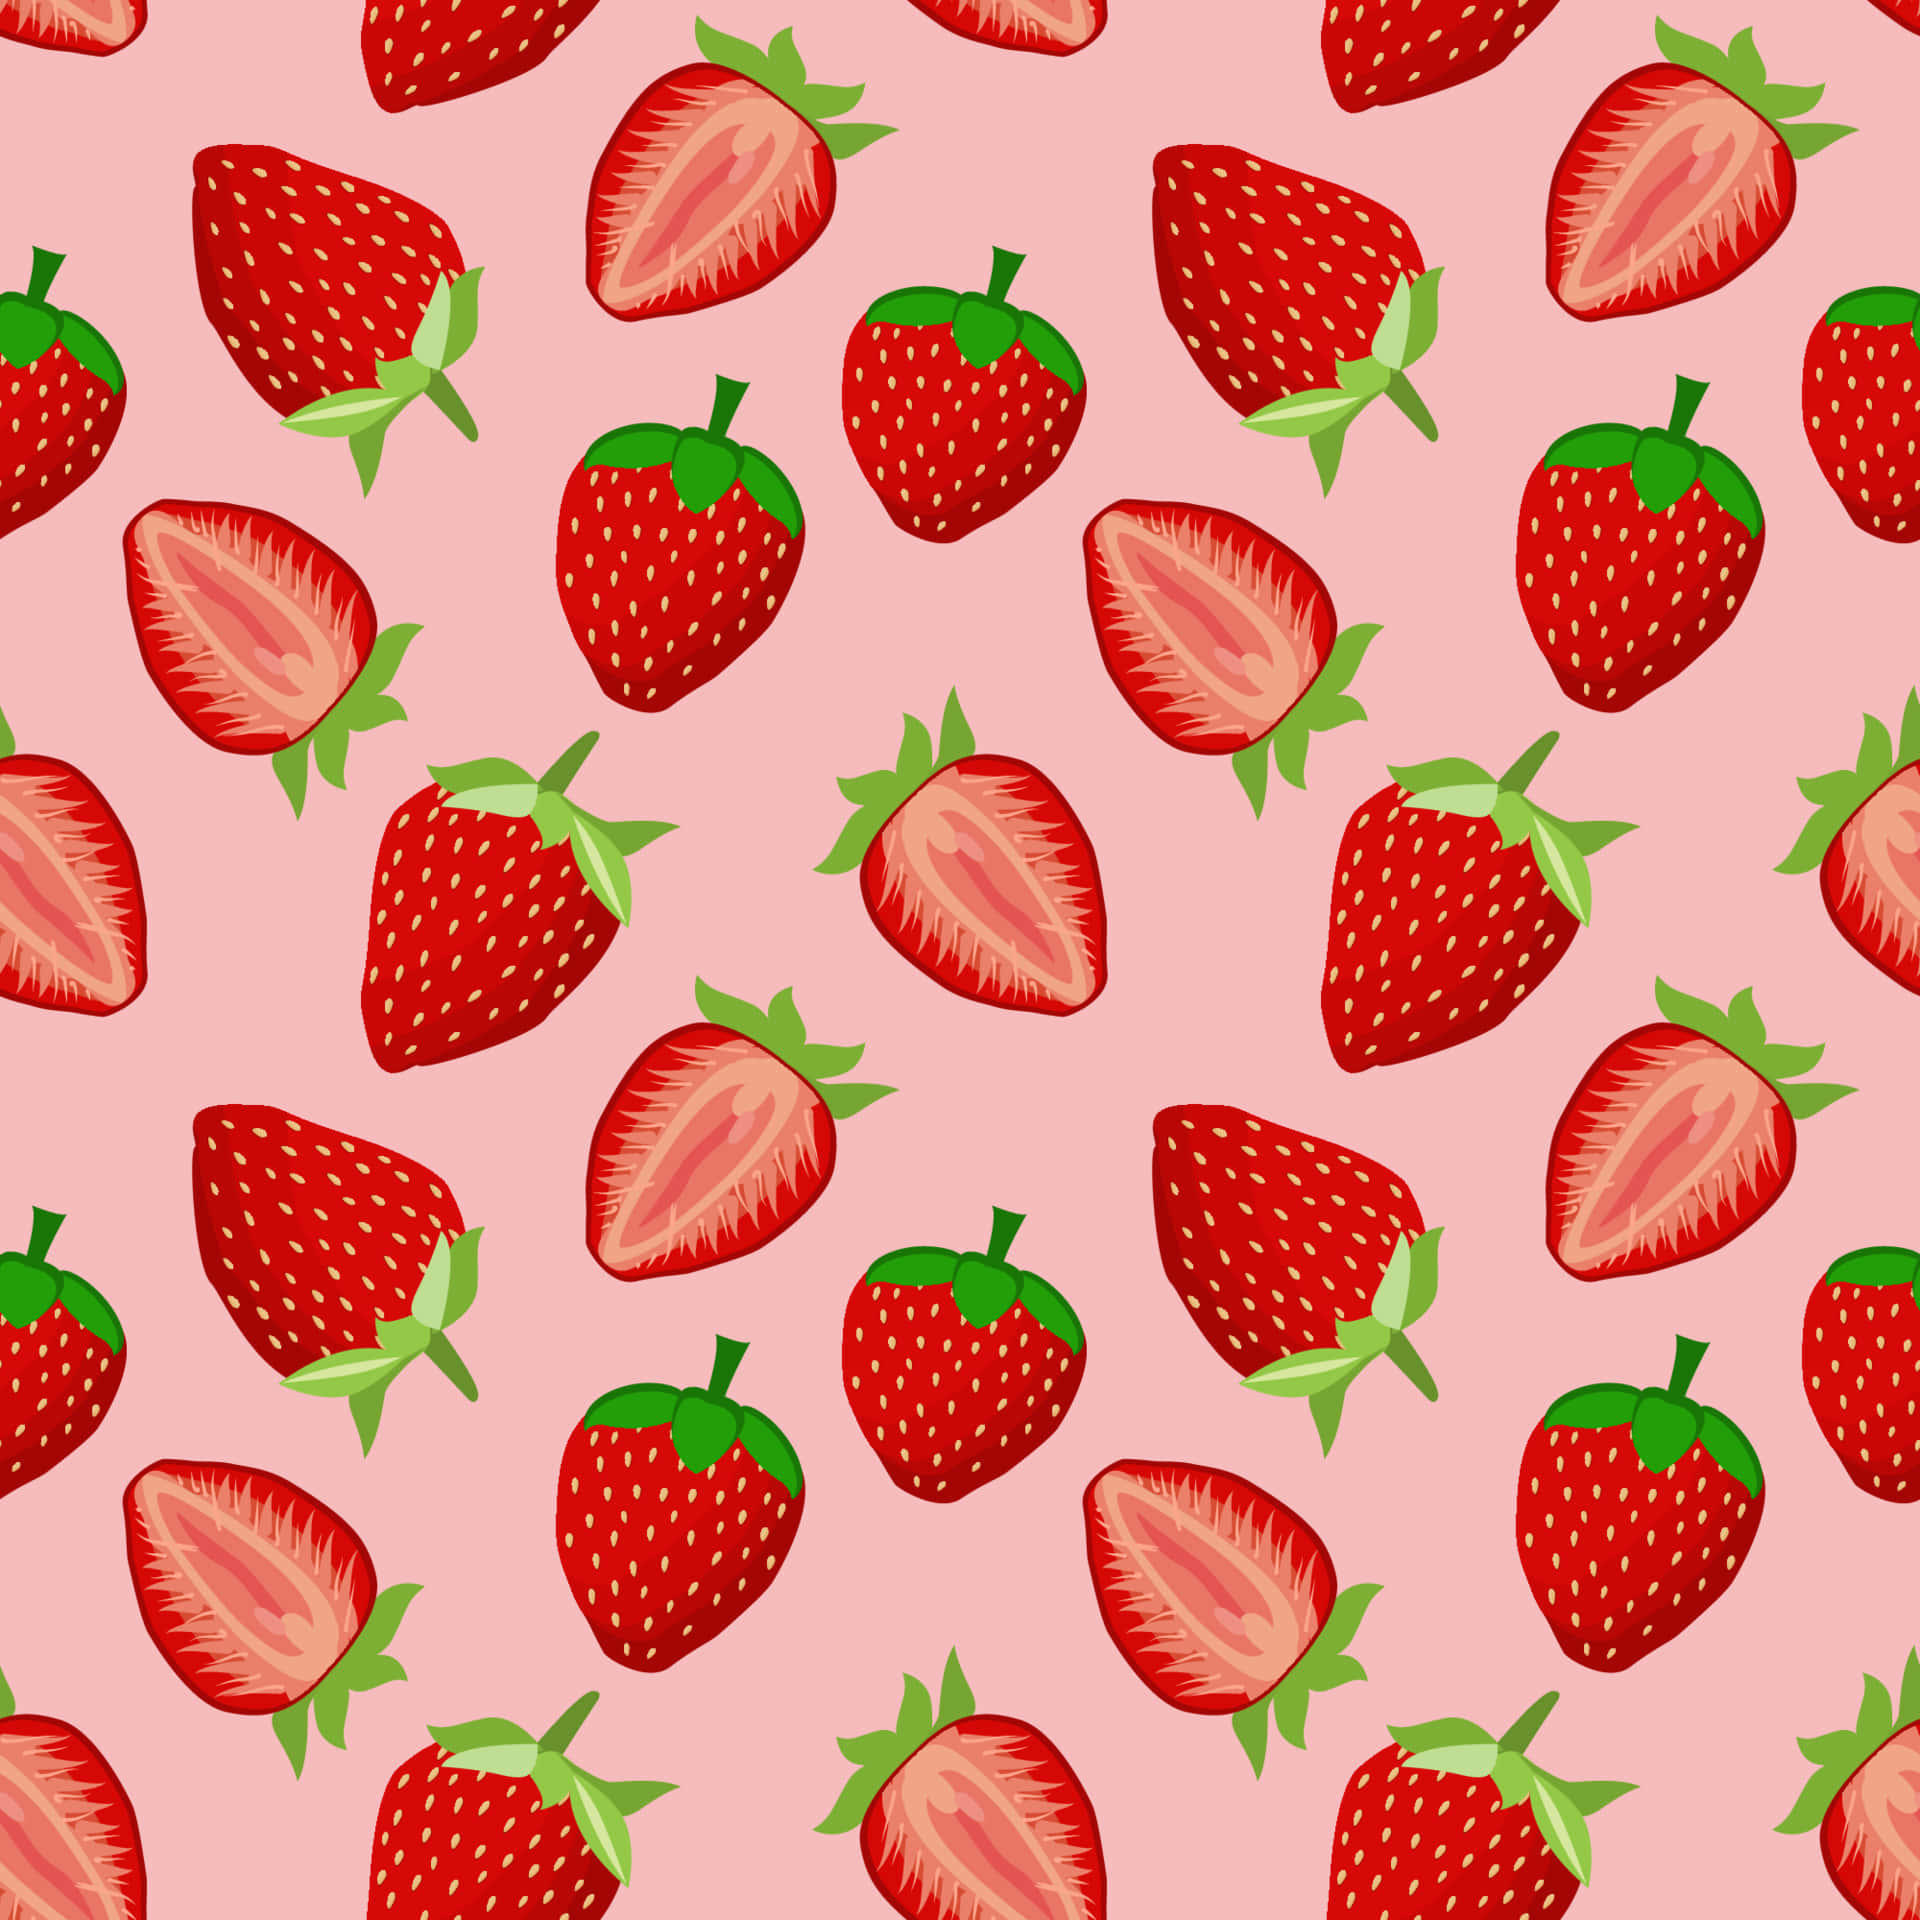 Frischeund Saftige Erdbeeren